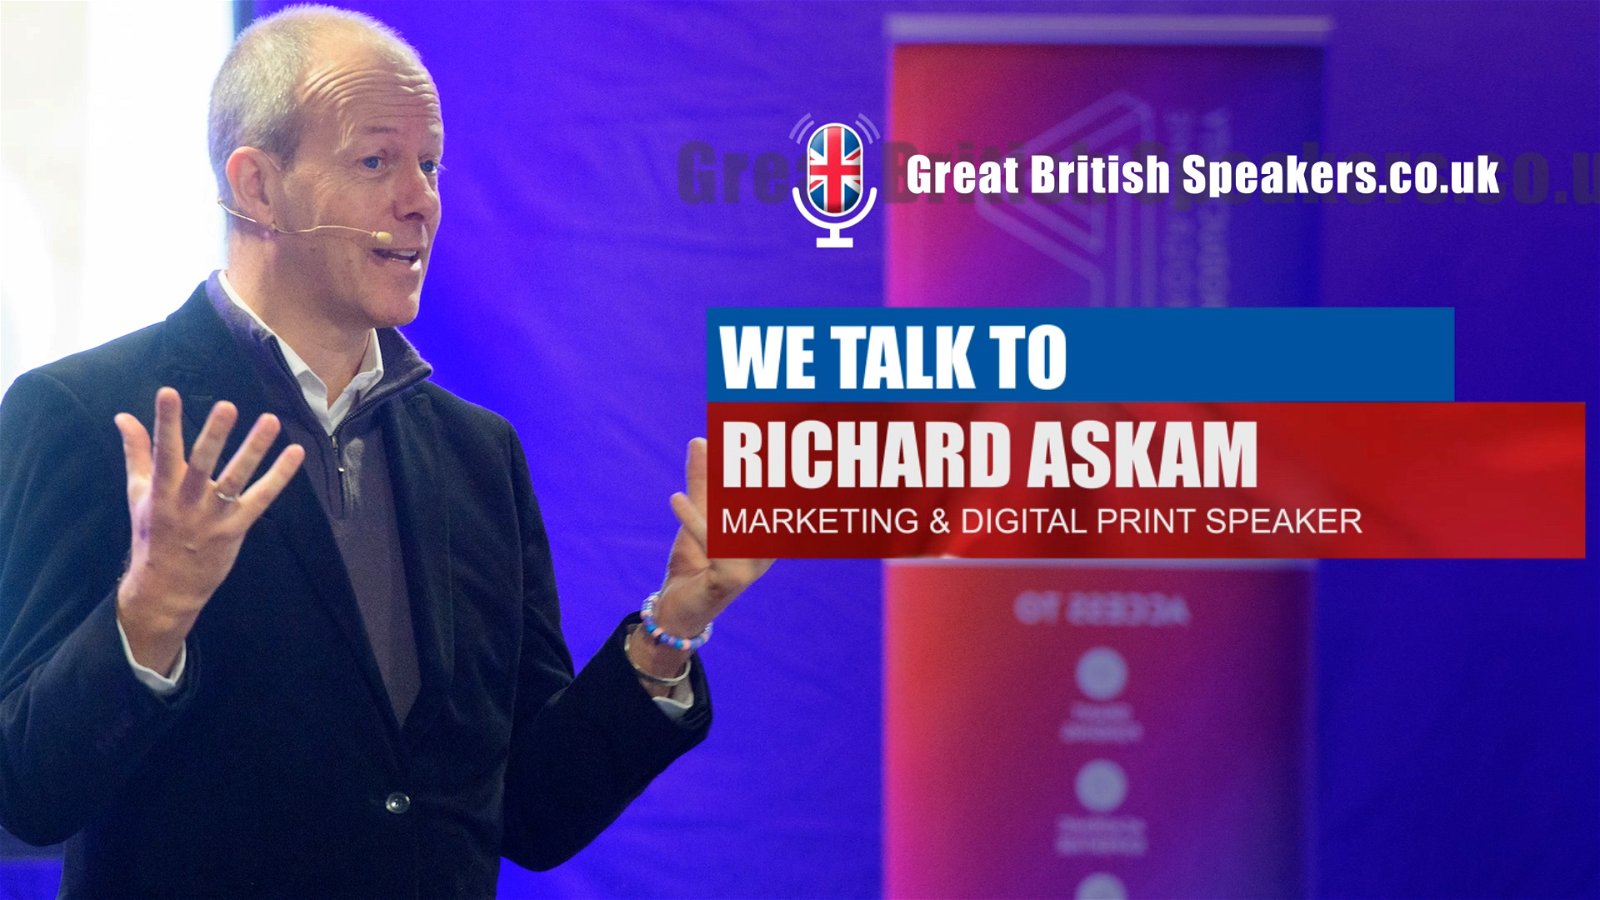 Richard Askam, branding speaker at Great British Speakers